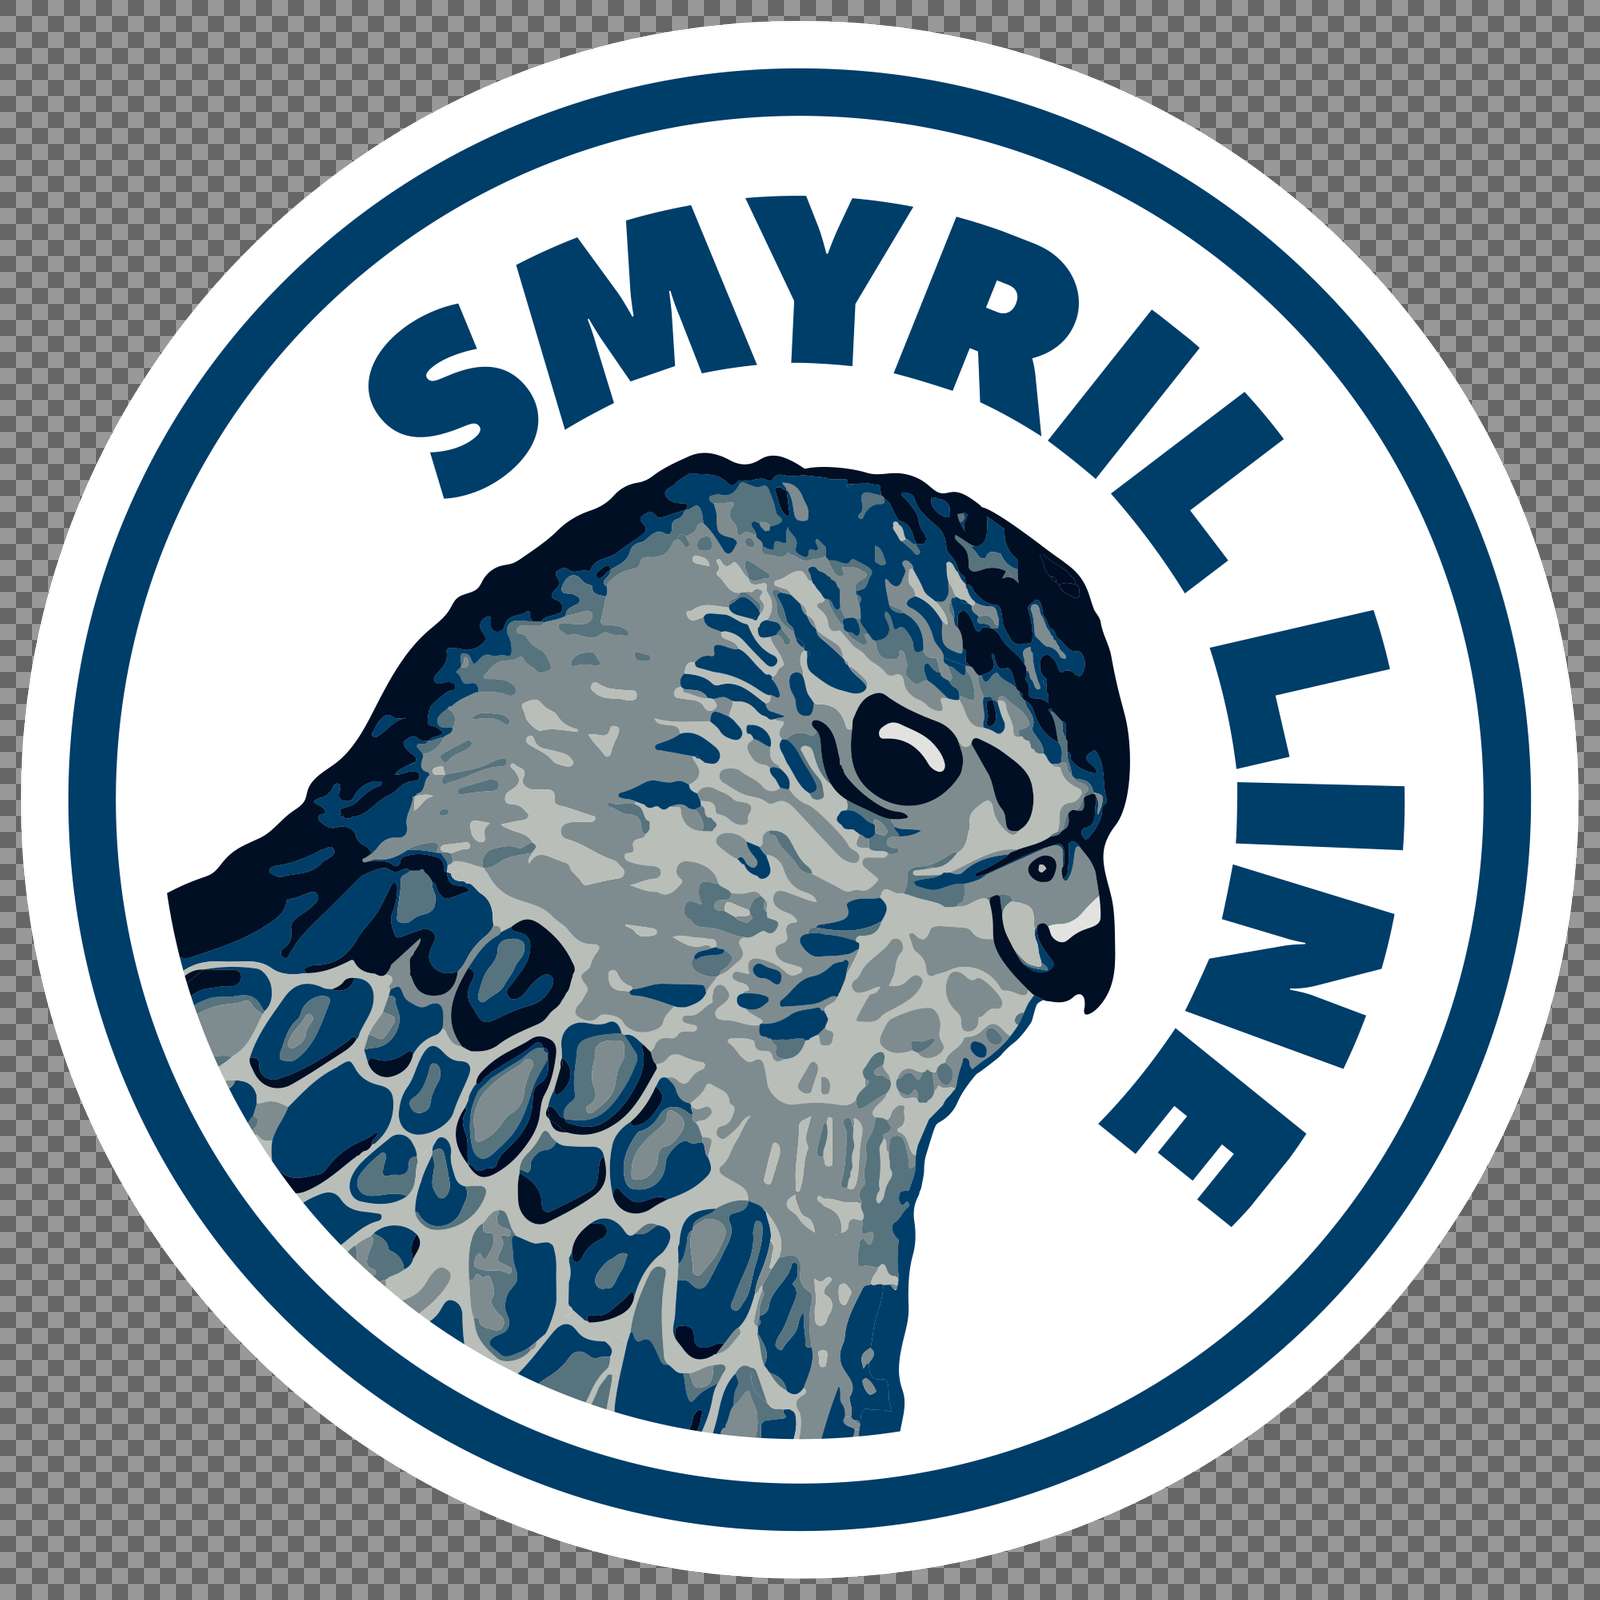 SML logo.png